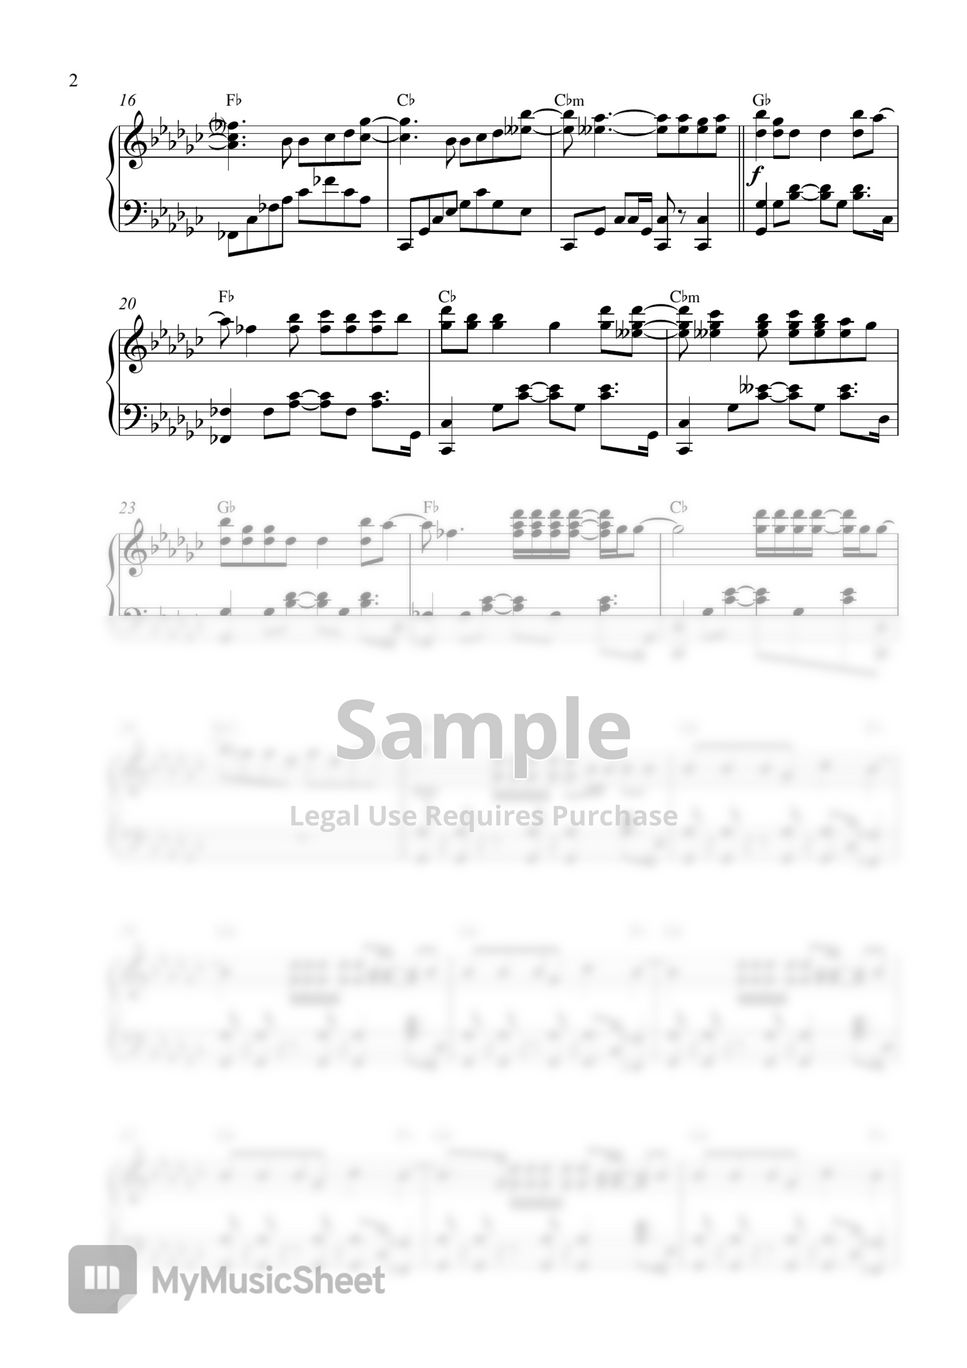 TWICE - SCIENTIST (2 PDF: Original Key Gb & Easier Key G) by Pianella Piano